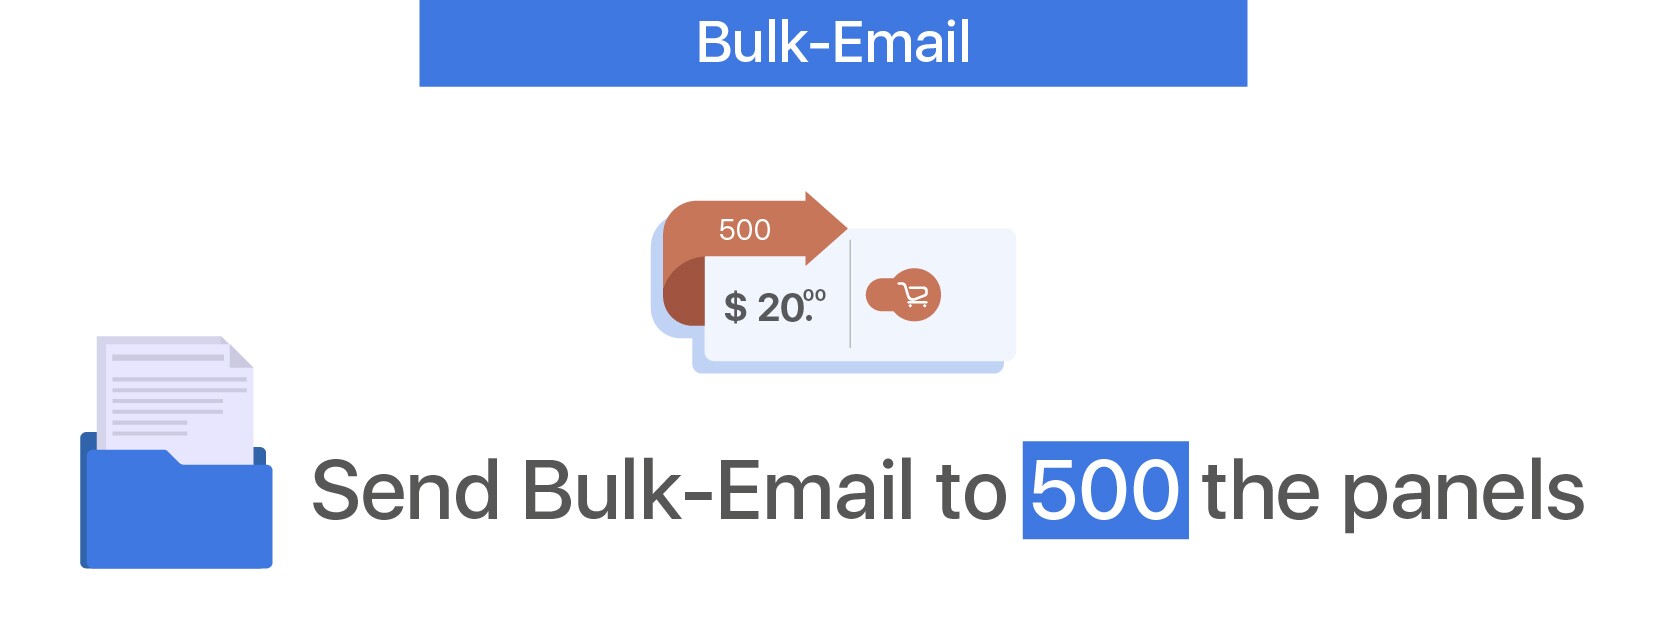 Bulk-Email - 500 Panels